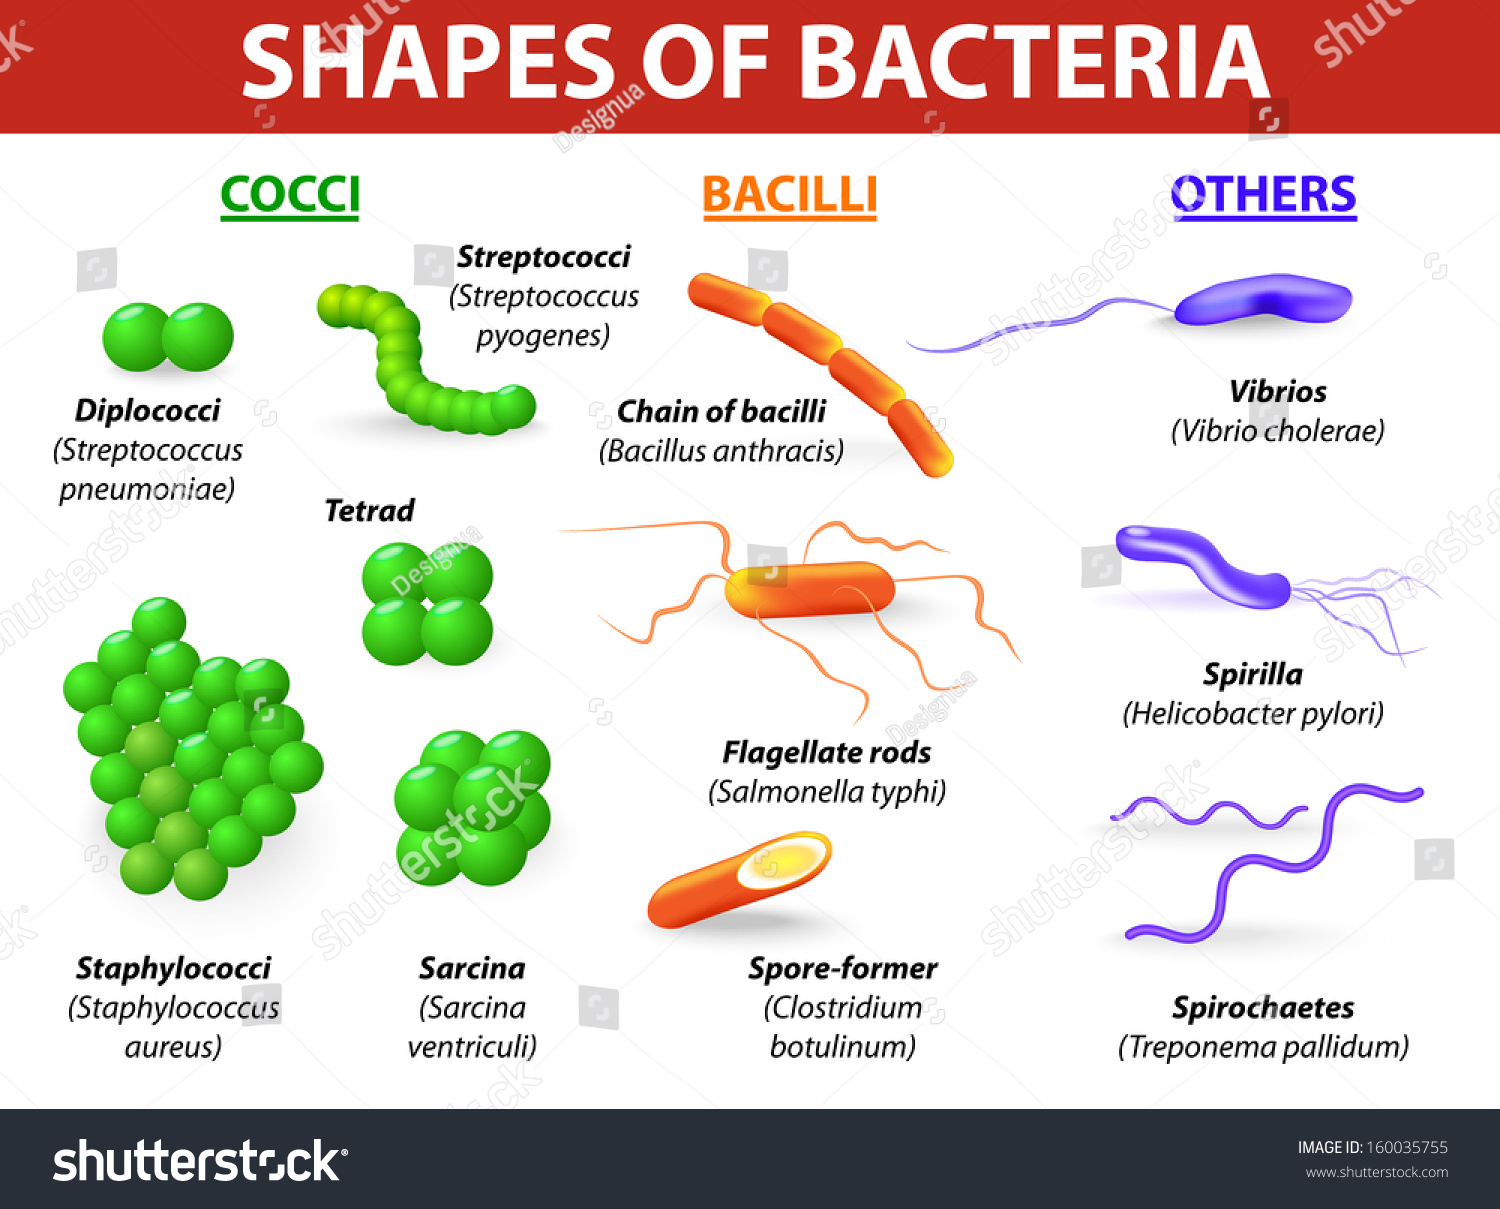 Shape of bacteria